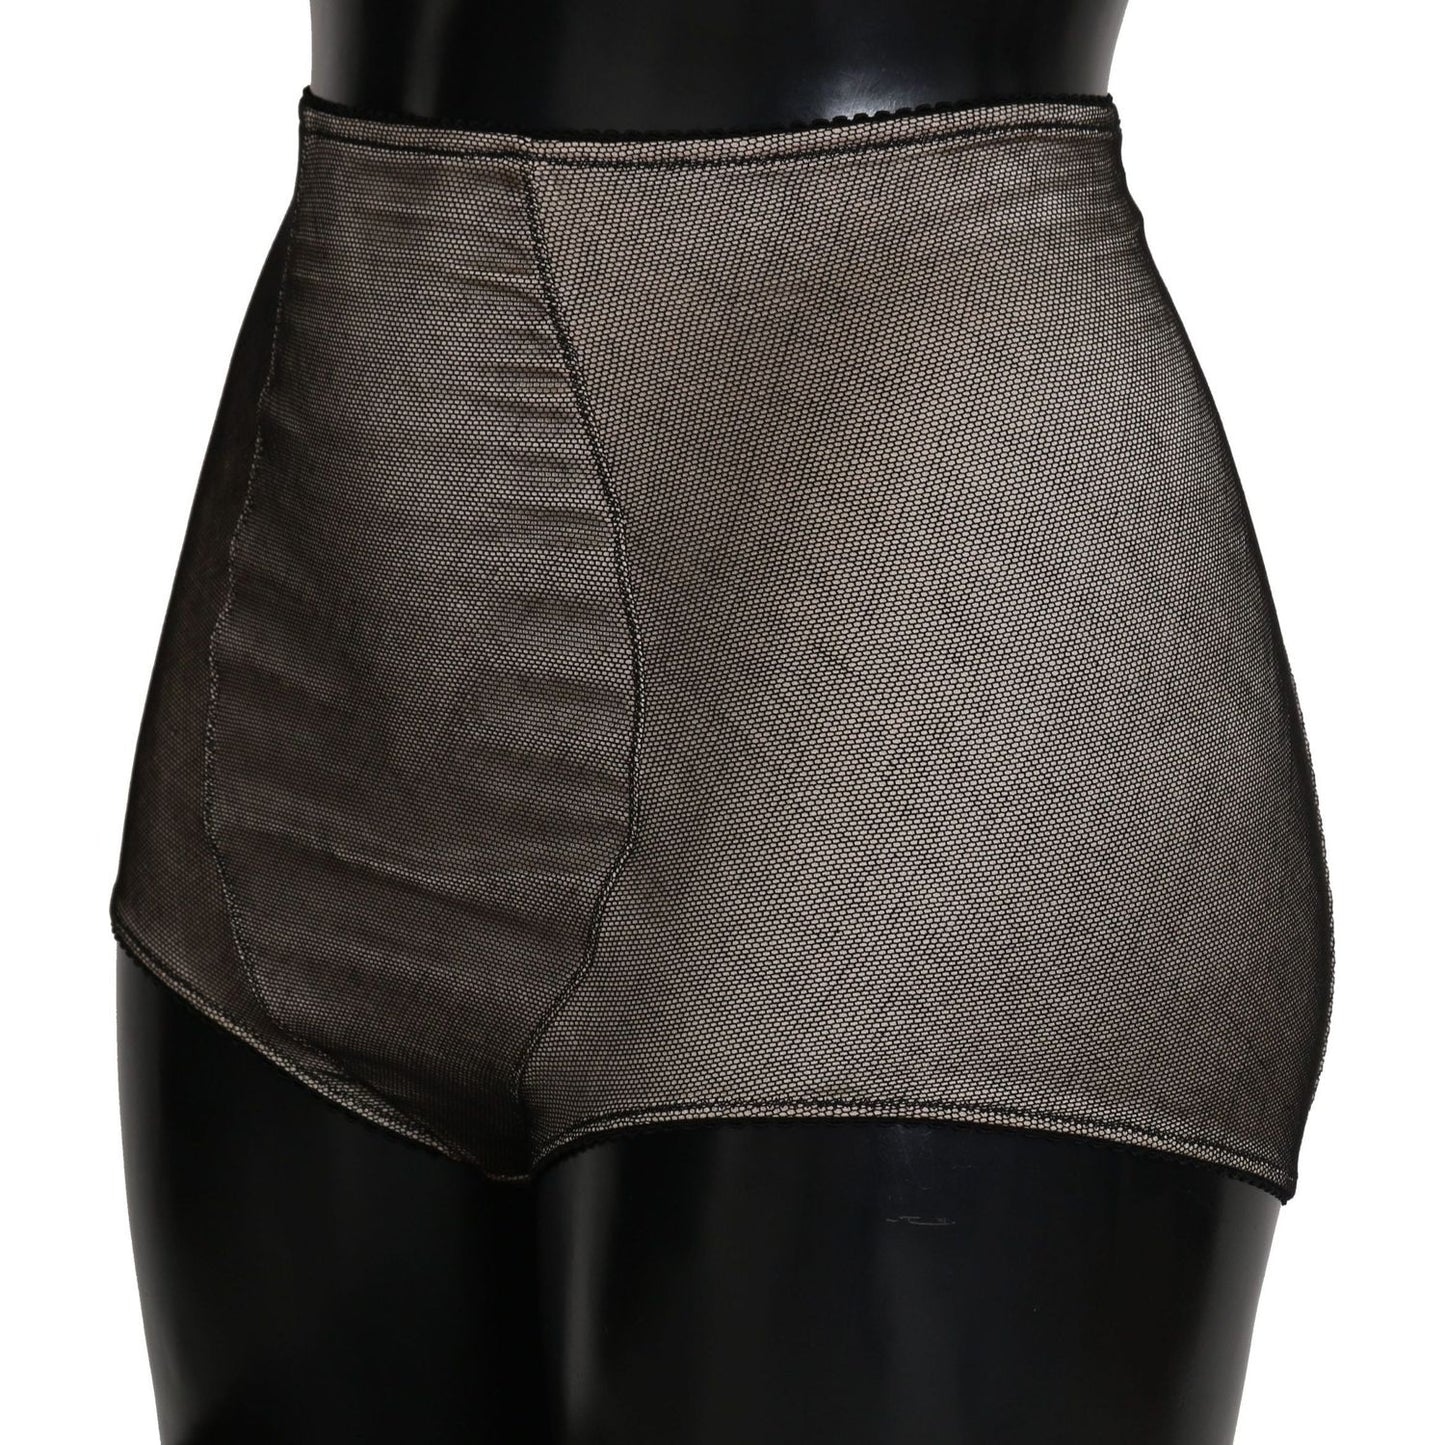 Dolce & Gabbana Beige Black Net Cotton Blend Chic Underwear bottoms-underwear-beige-with-black-net